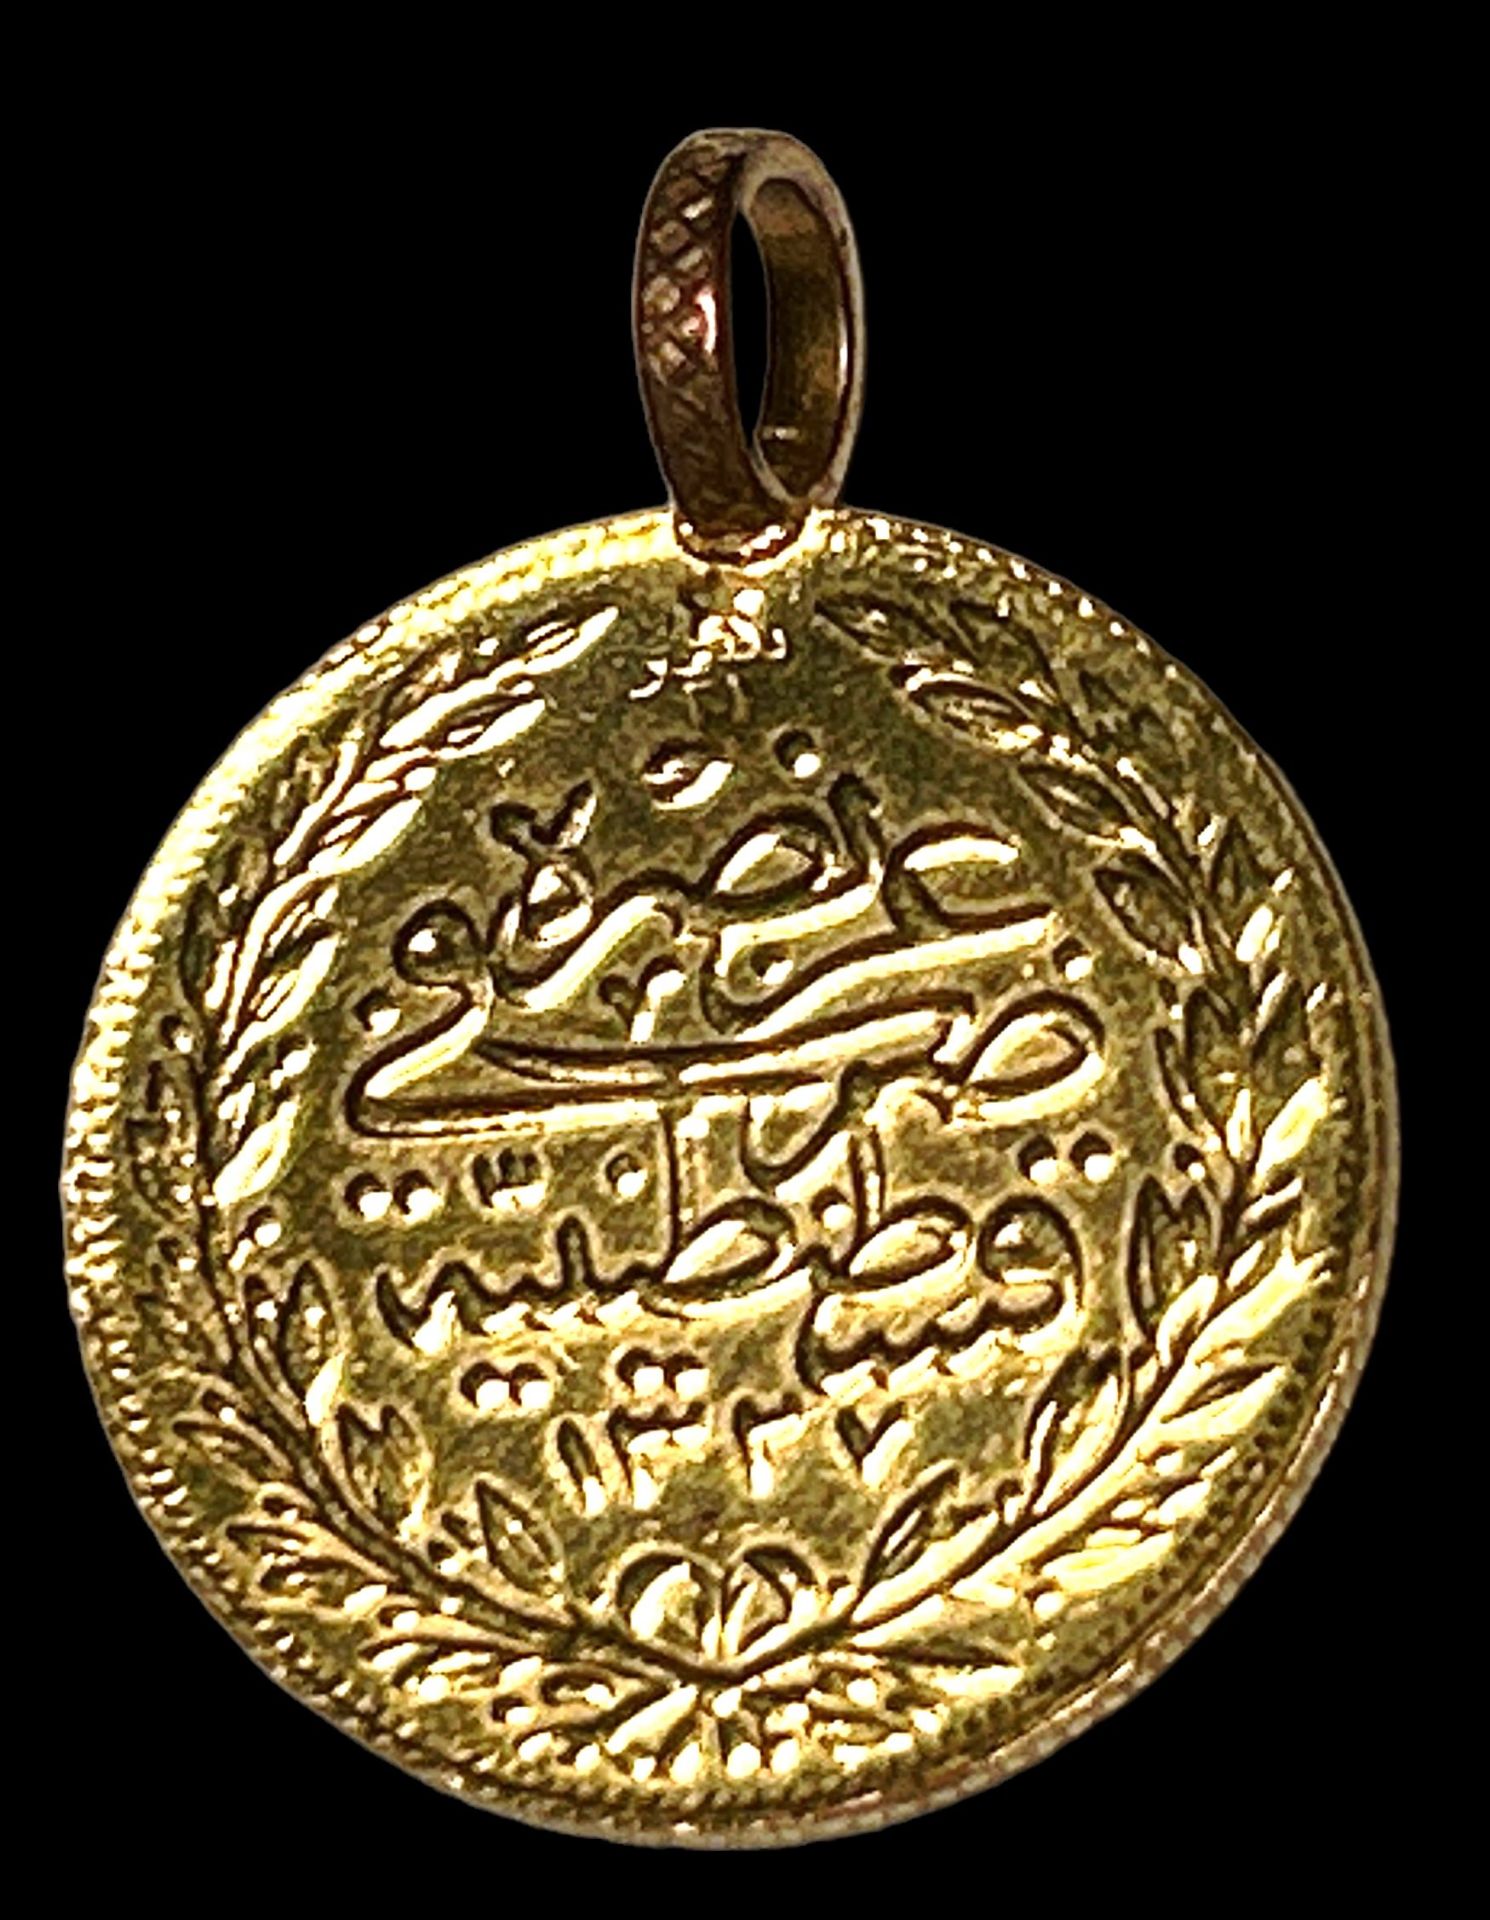 Münzanhänger Gold-916-, 100 Piaster, Türkei, gehenkelt, Öse unechtes Material, zus. 7,4 gr. D-ca. 2